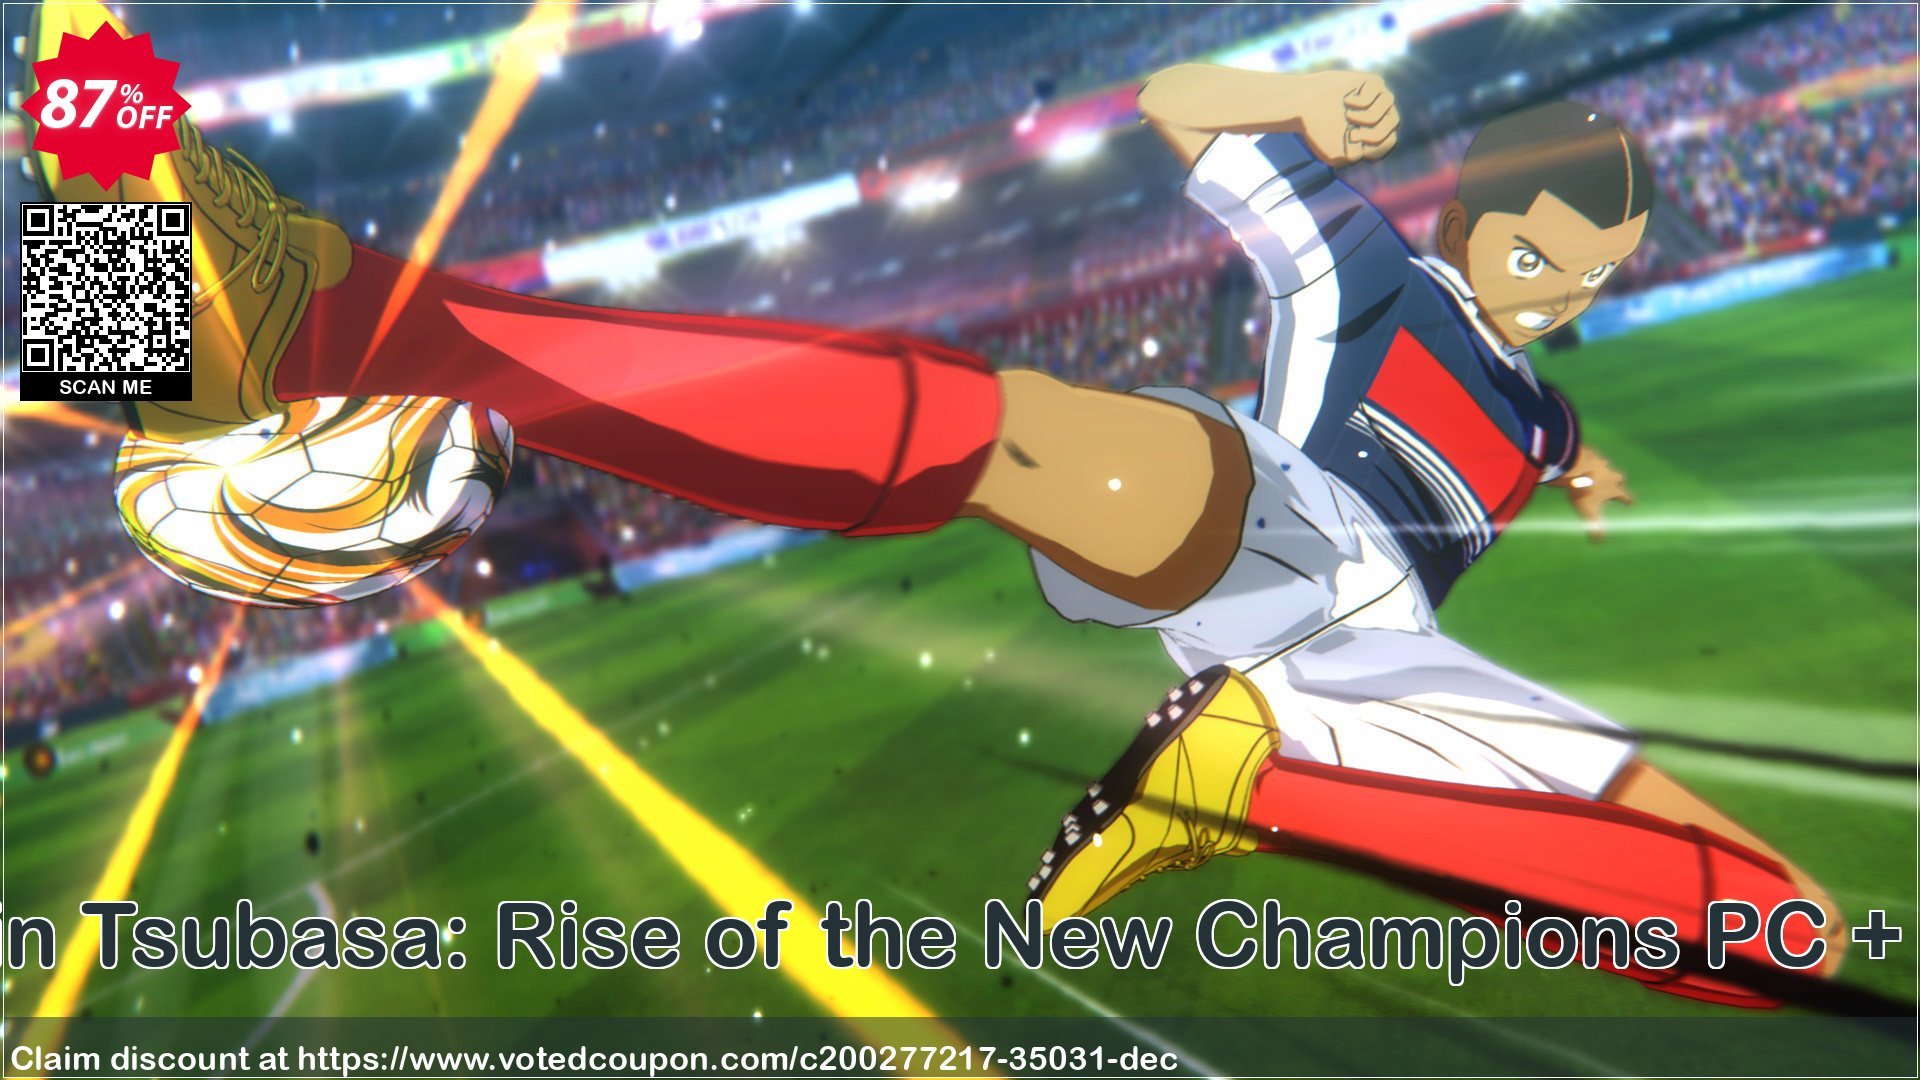 Captain Tsubasa: Rise of the New Champions PC + Bonus Coupon Code Apr 2024, 87% OFF - VotedCoupon